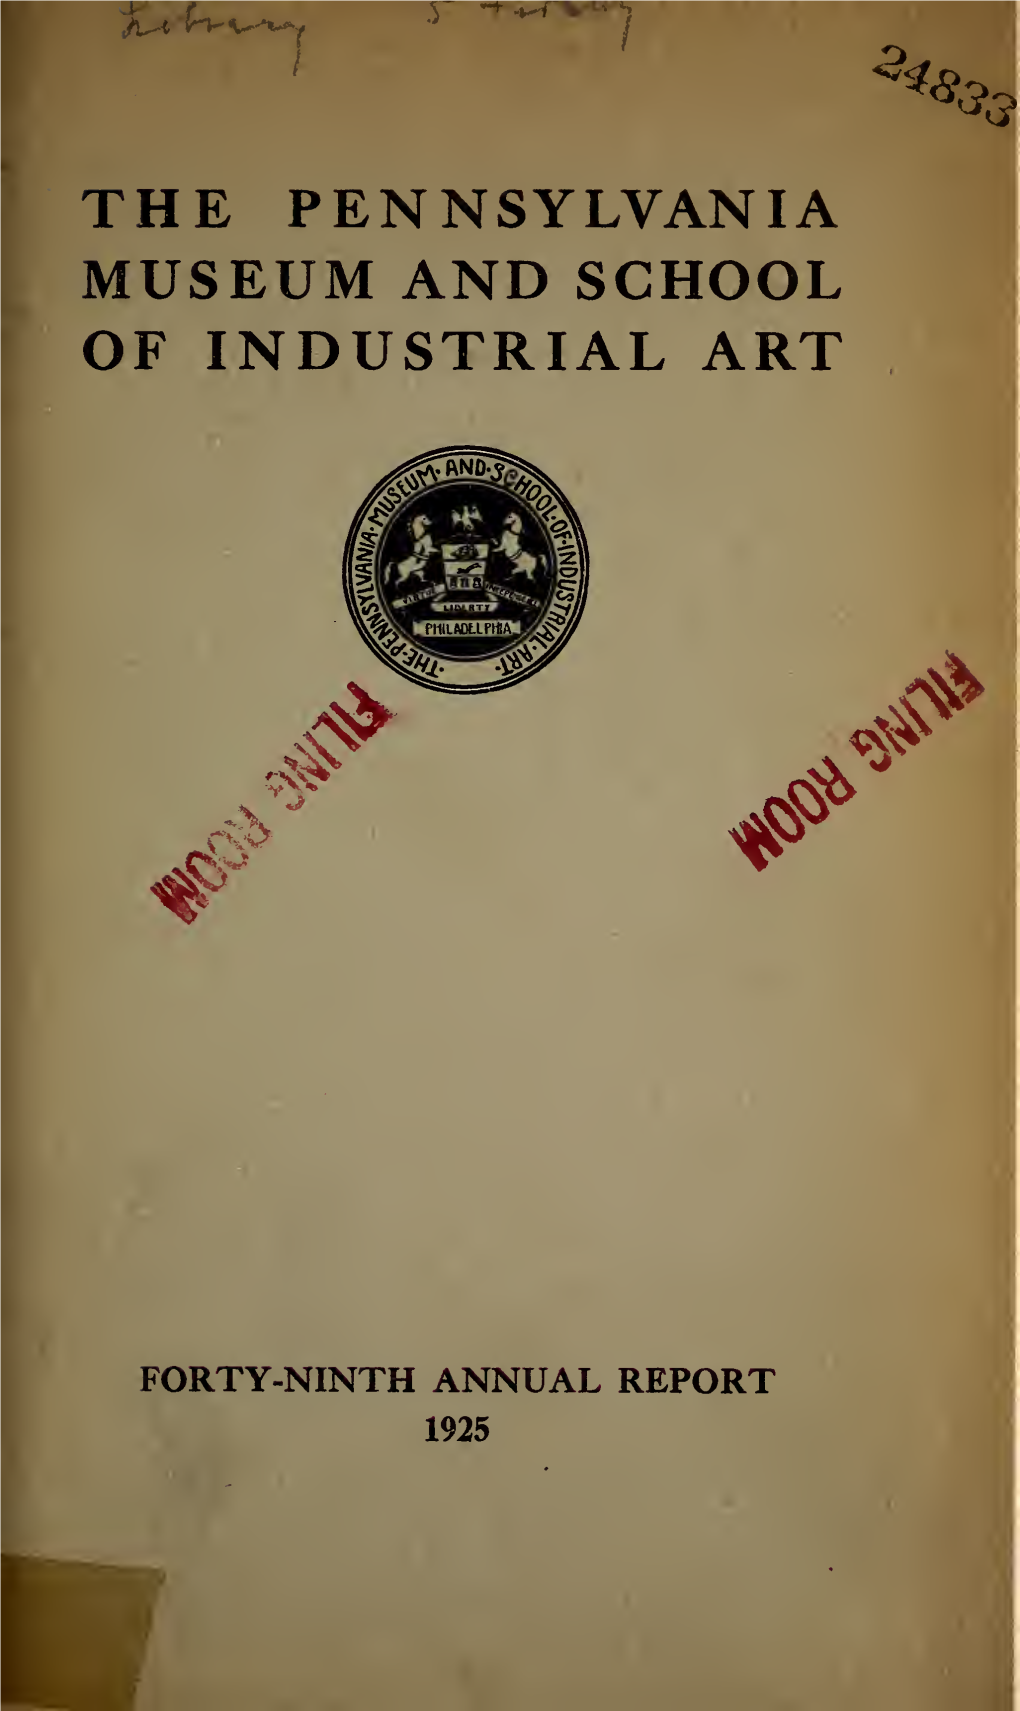 Annual Report, 1925